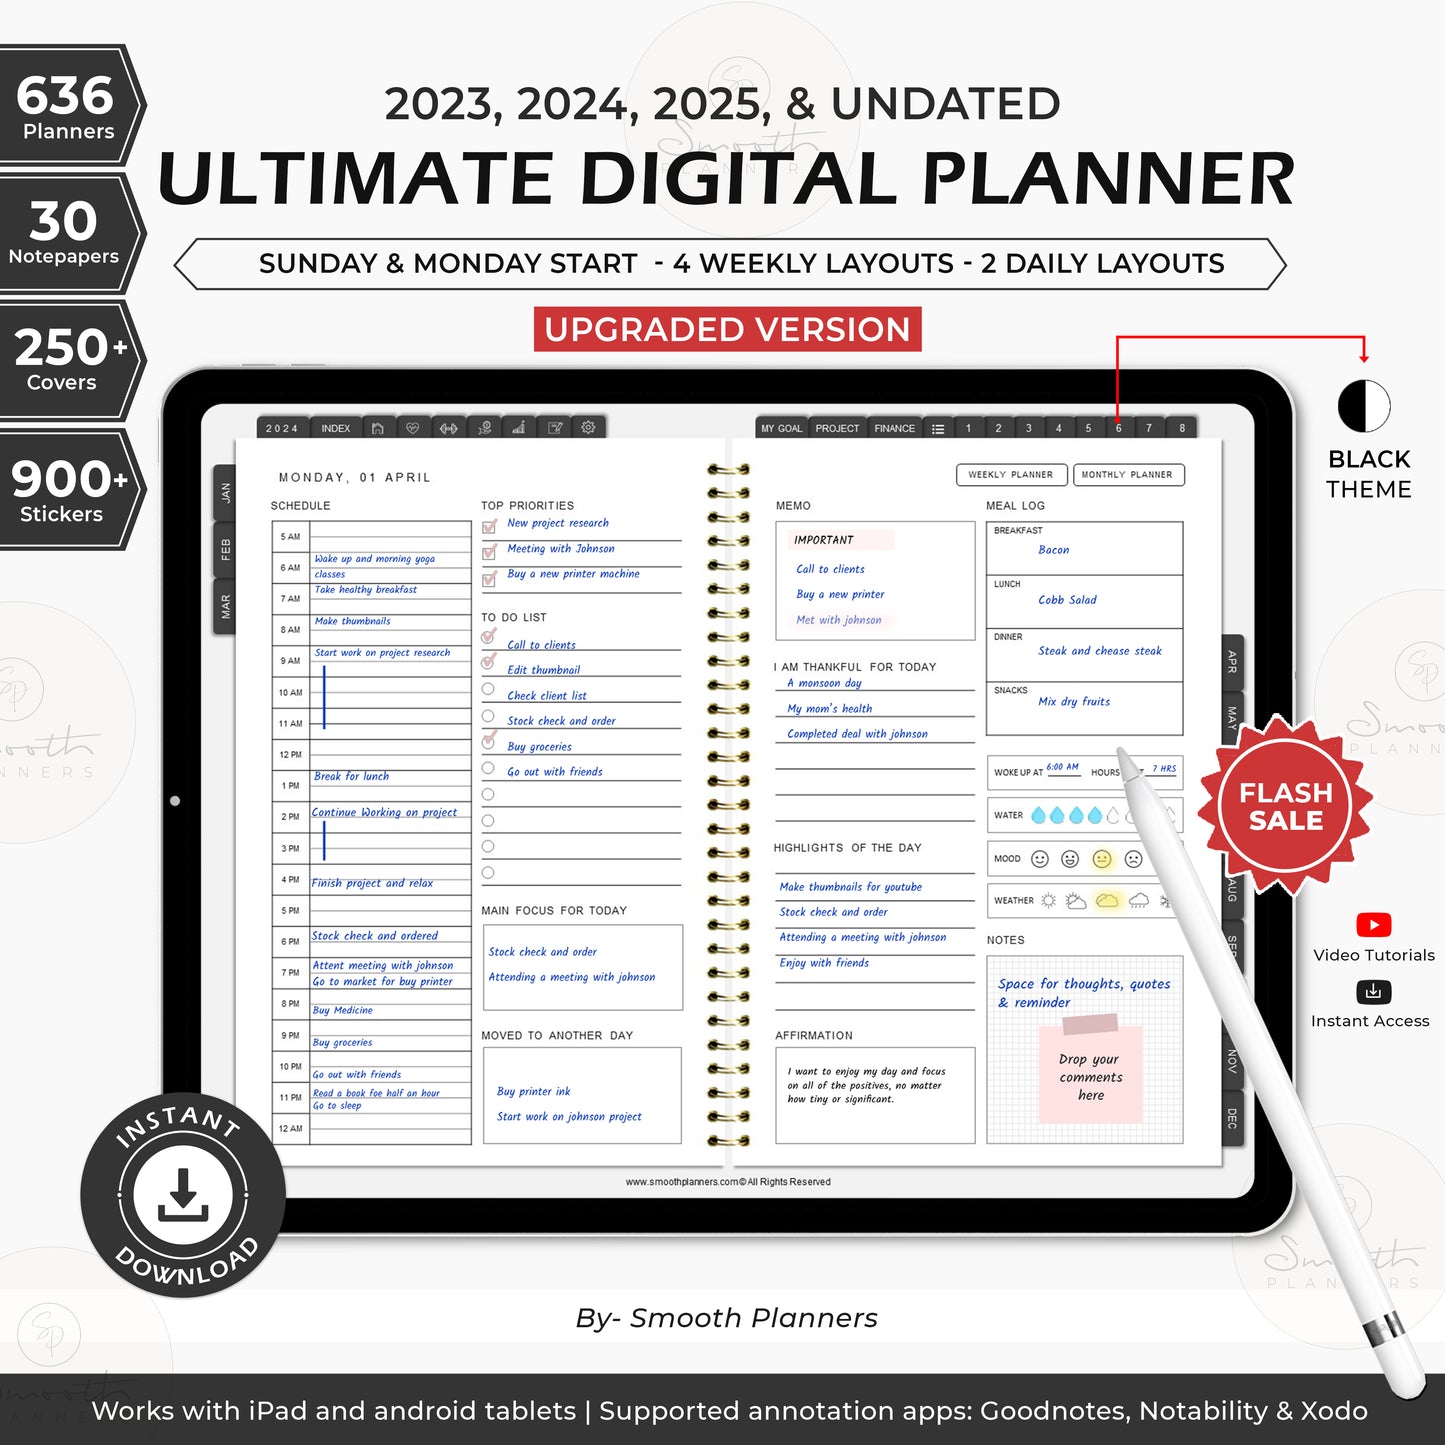 Ultimate Digital Planner | 2023, 2024, 2025 + Undated - BLACK